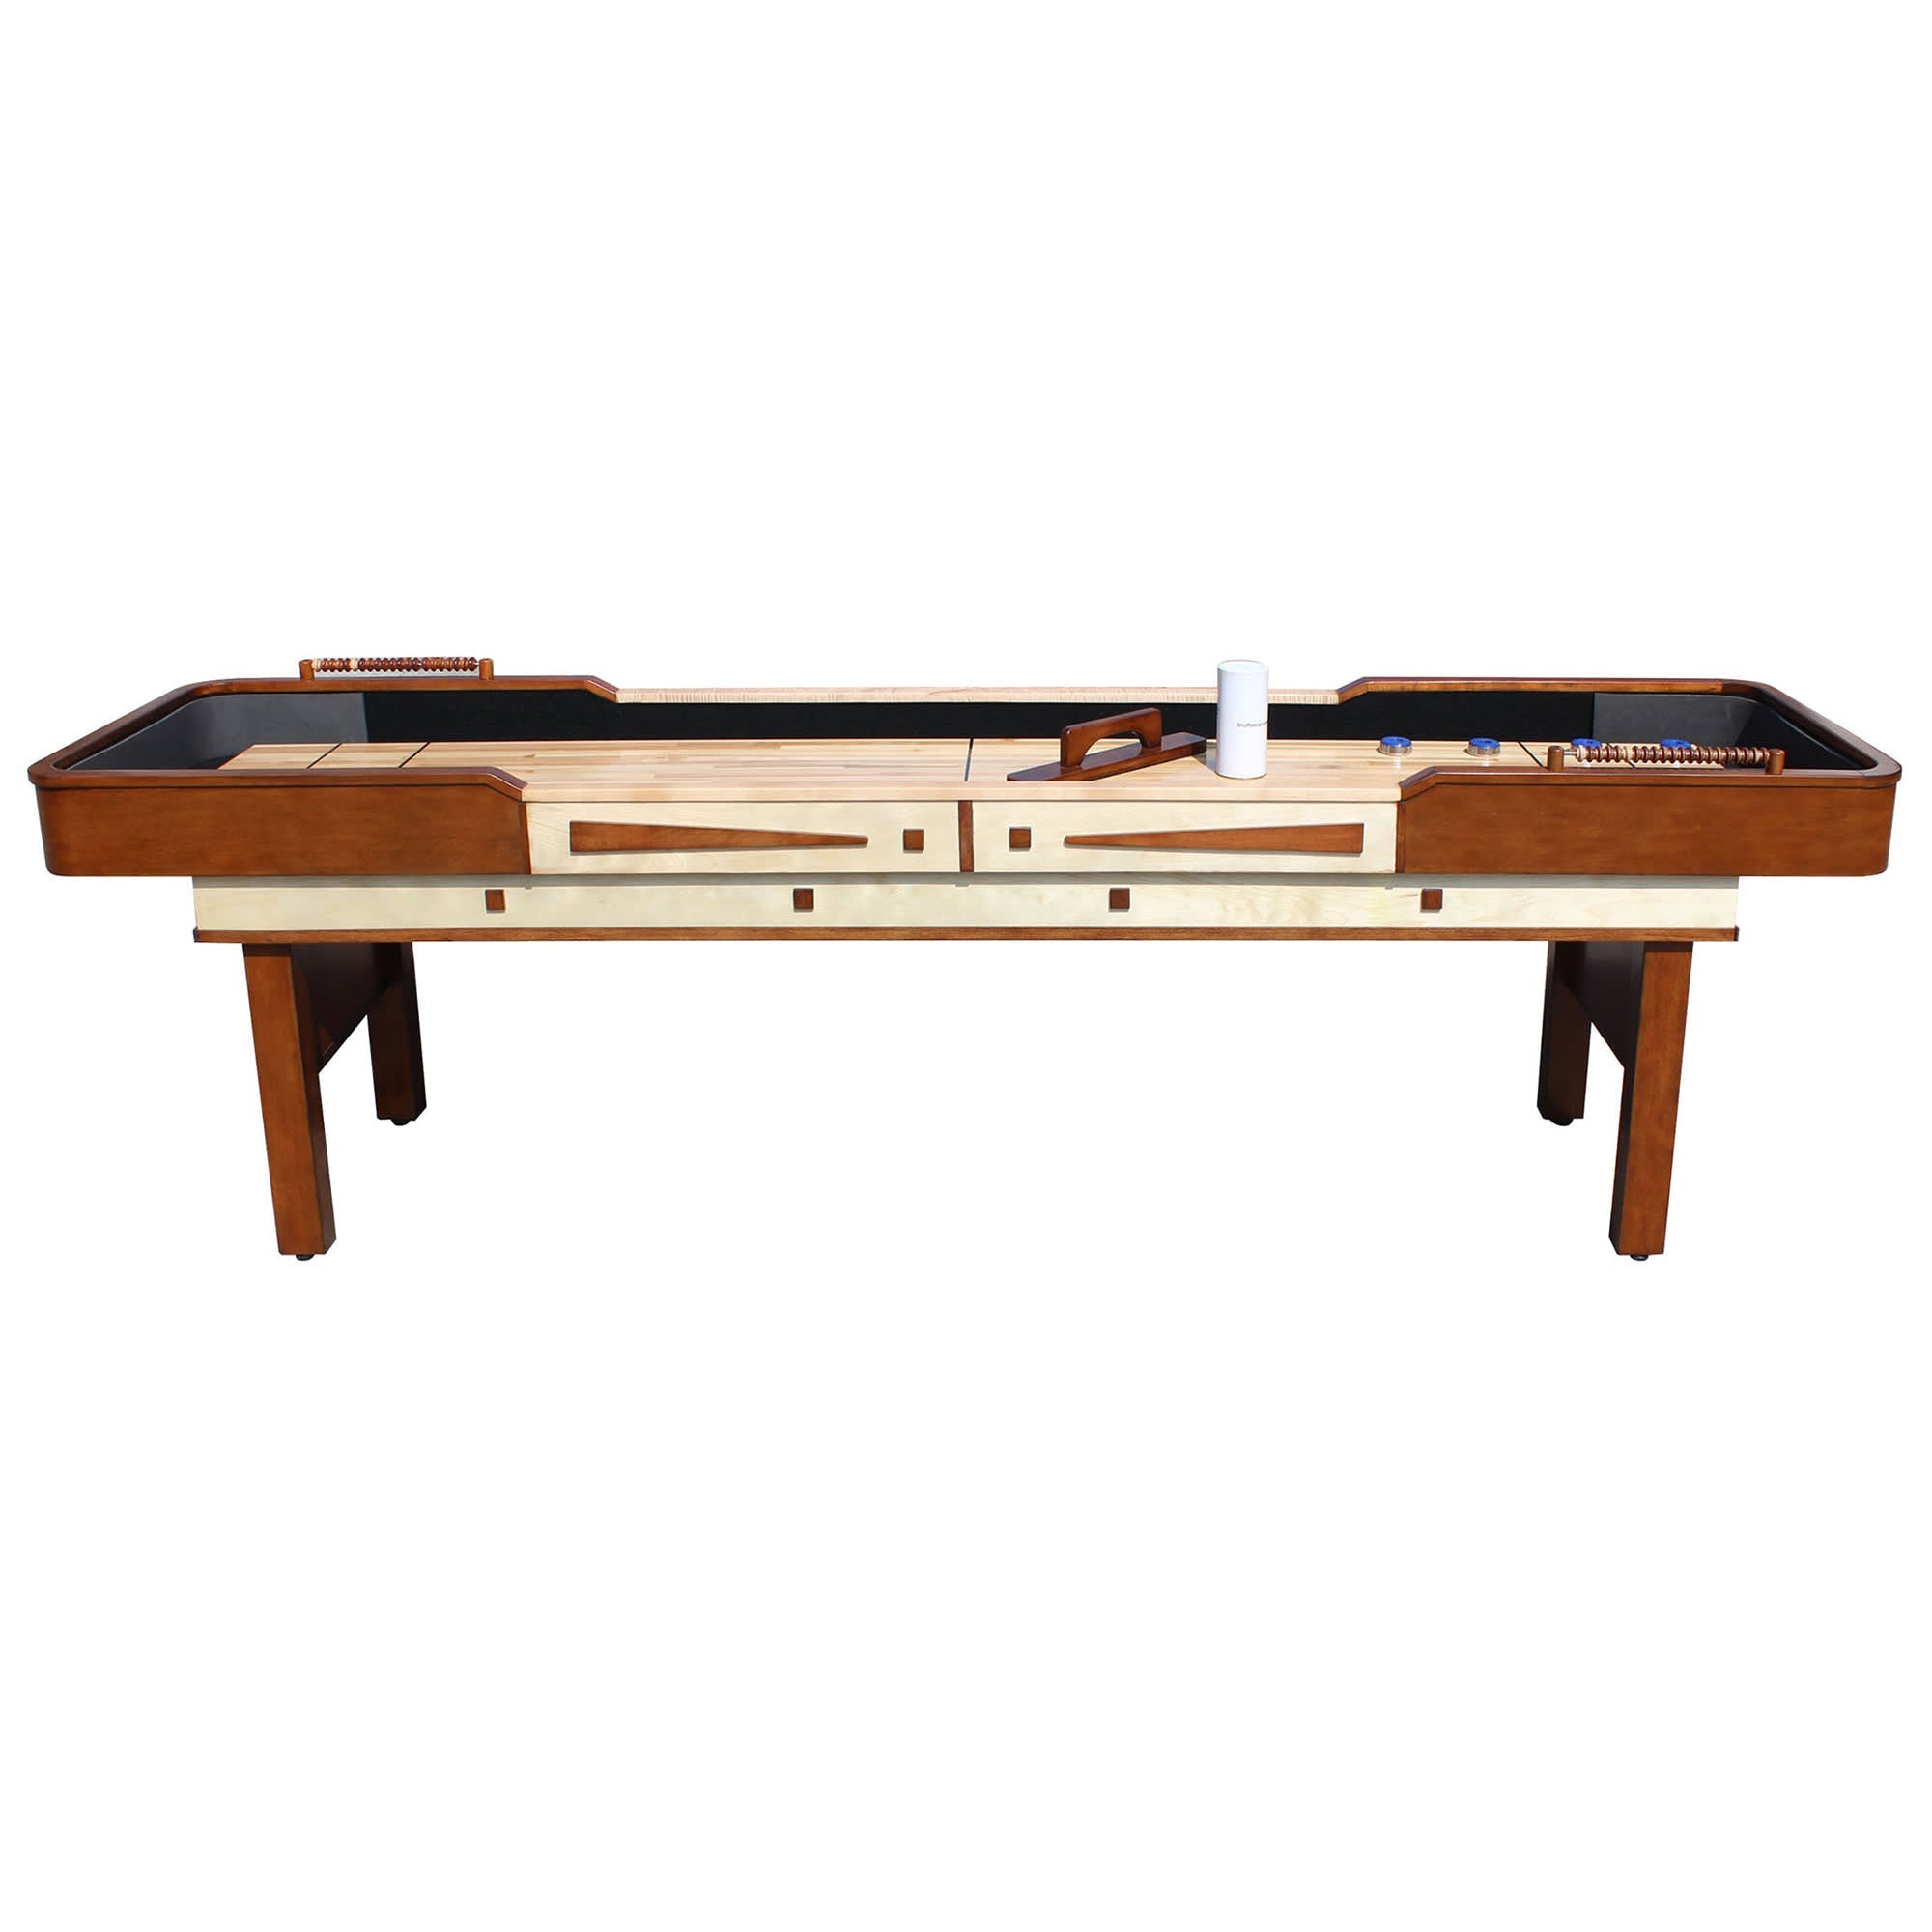 Merlot 9' Shuffleboard Table